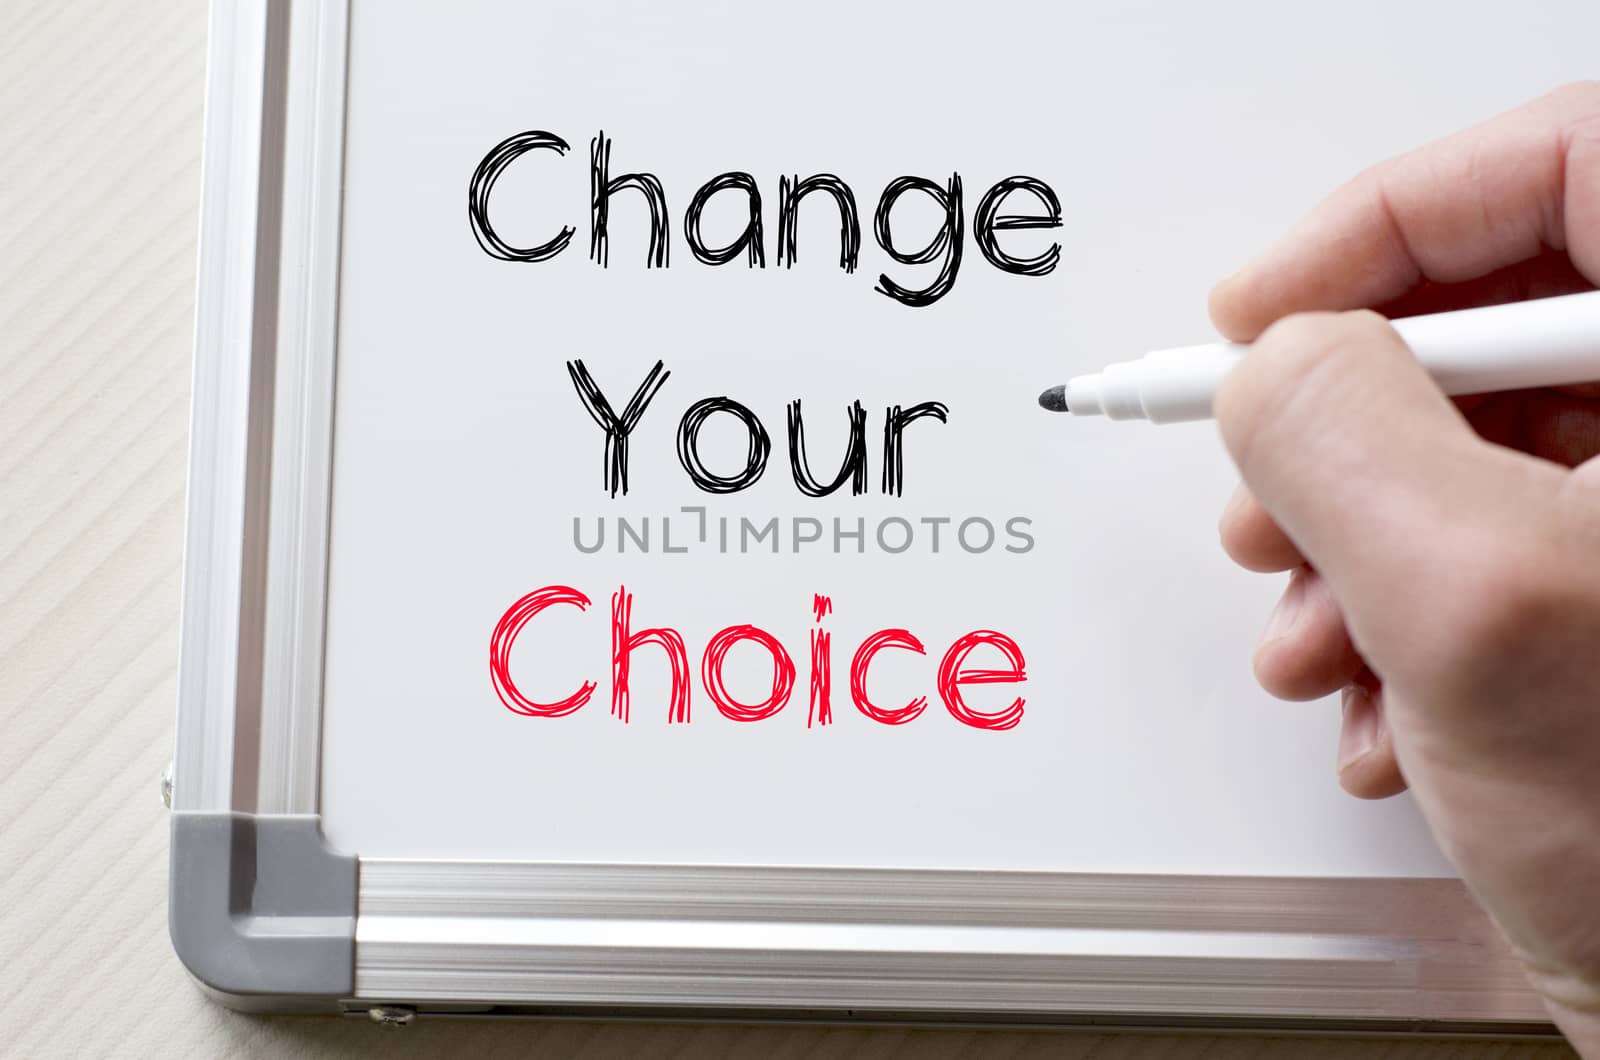 Human hand writing change your choice on whiteboard